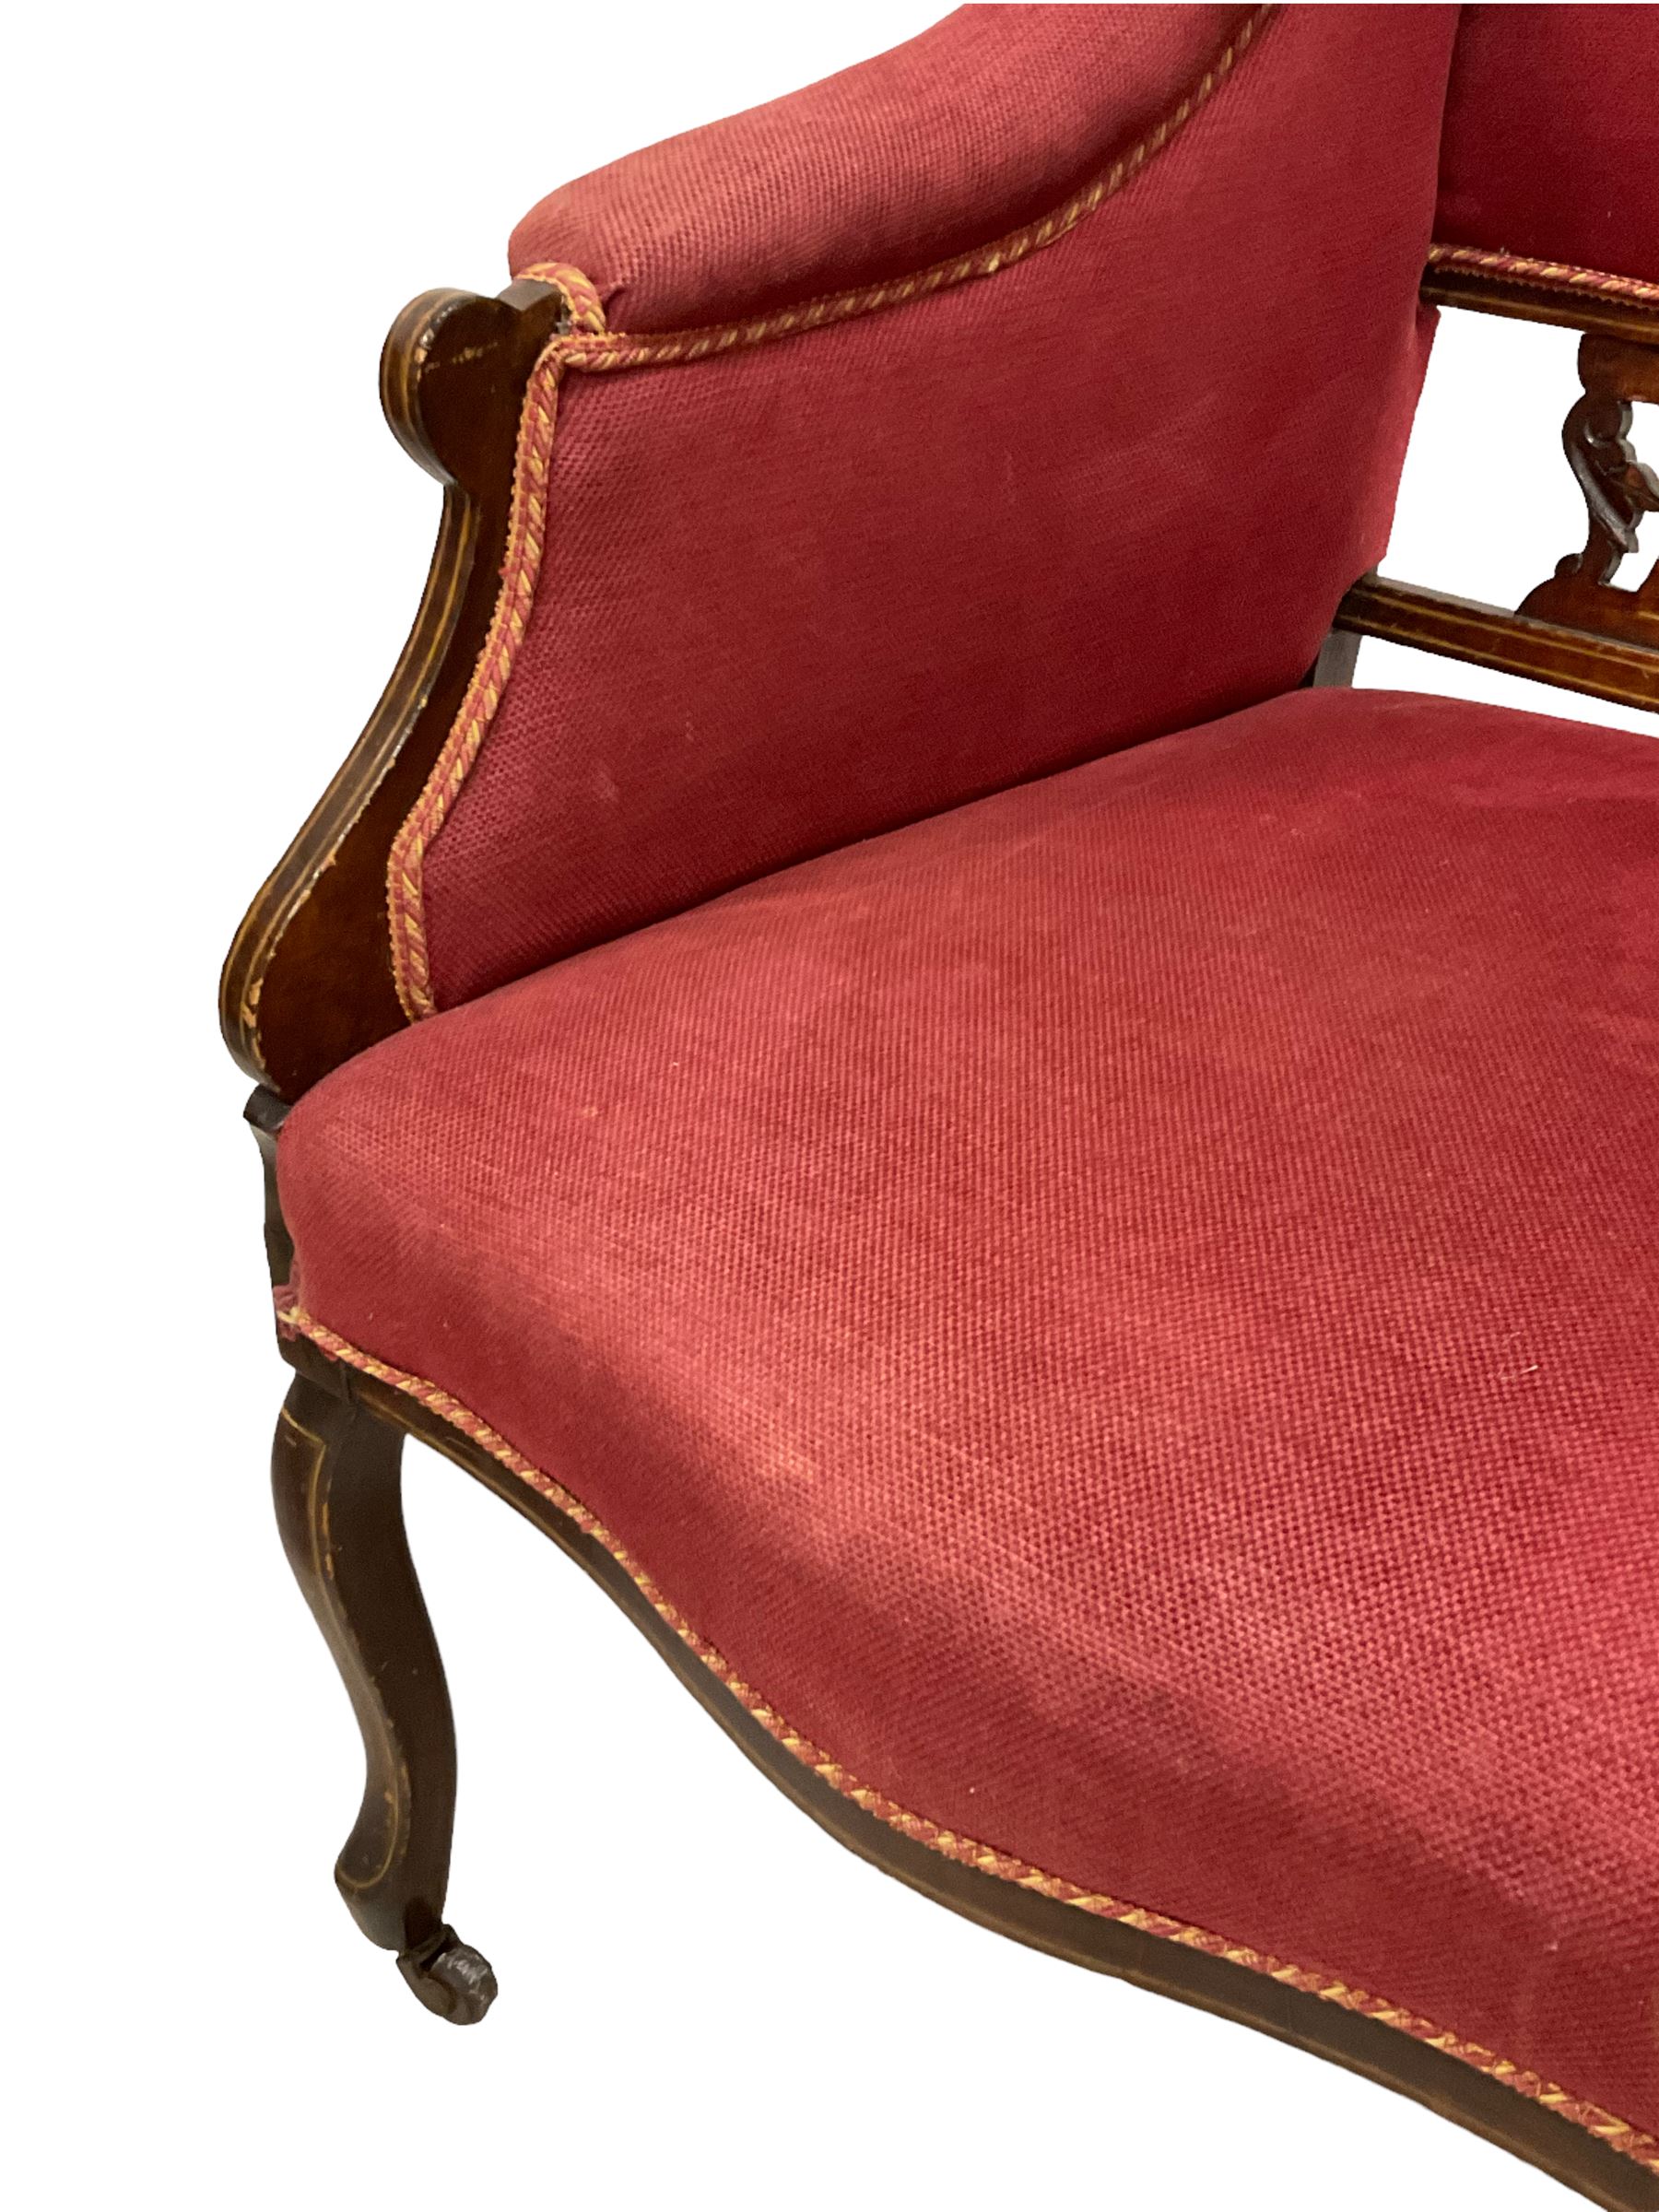 Pair Edwardian walnut framed armchairs - Image 3 of 4